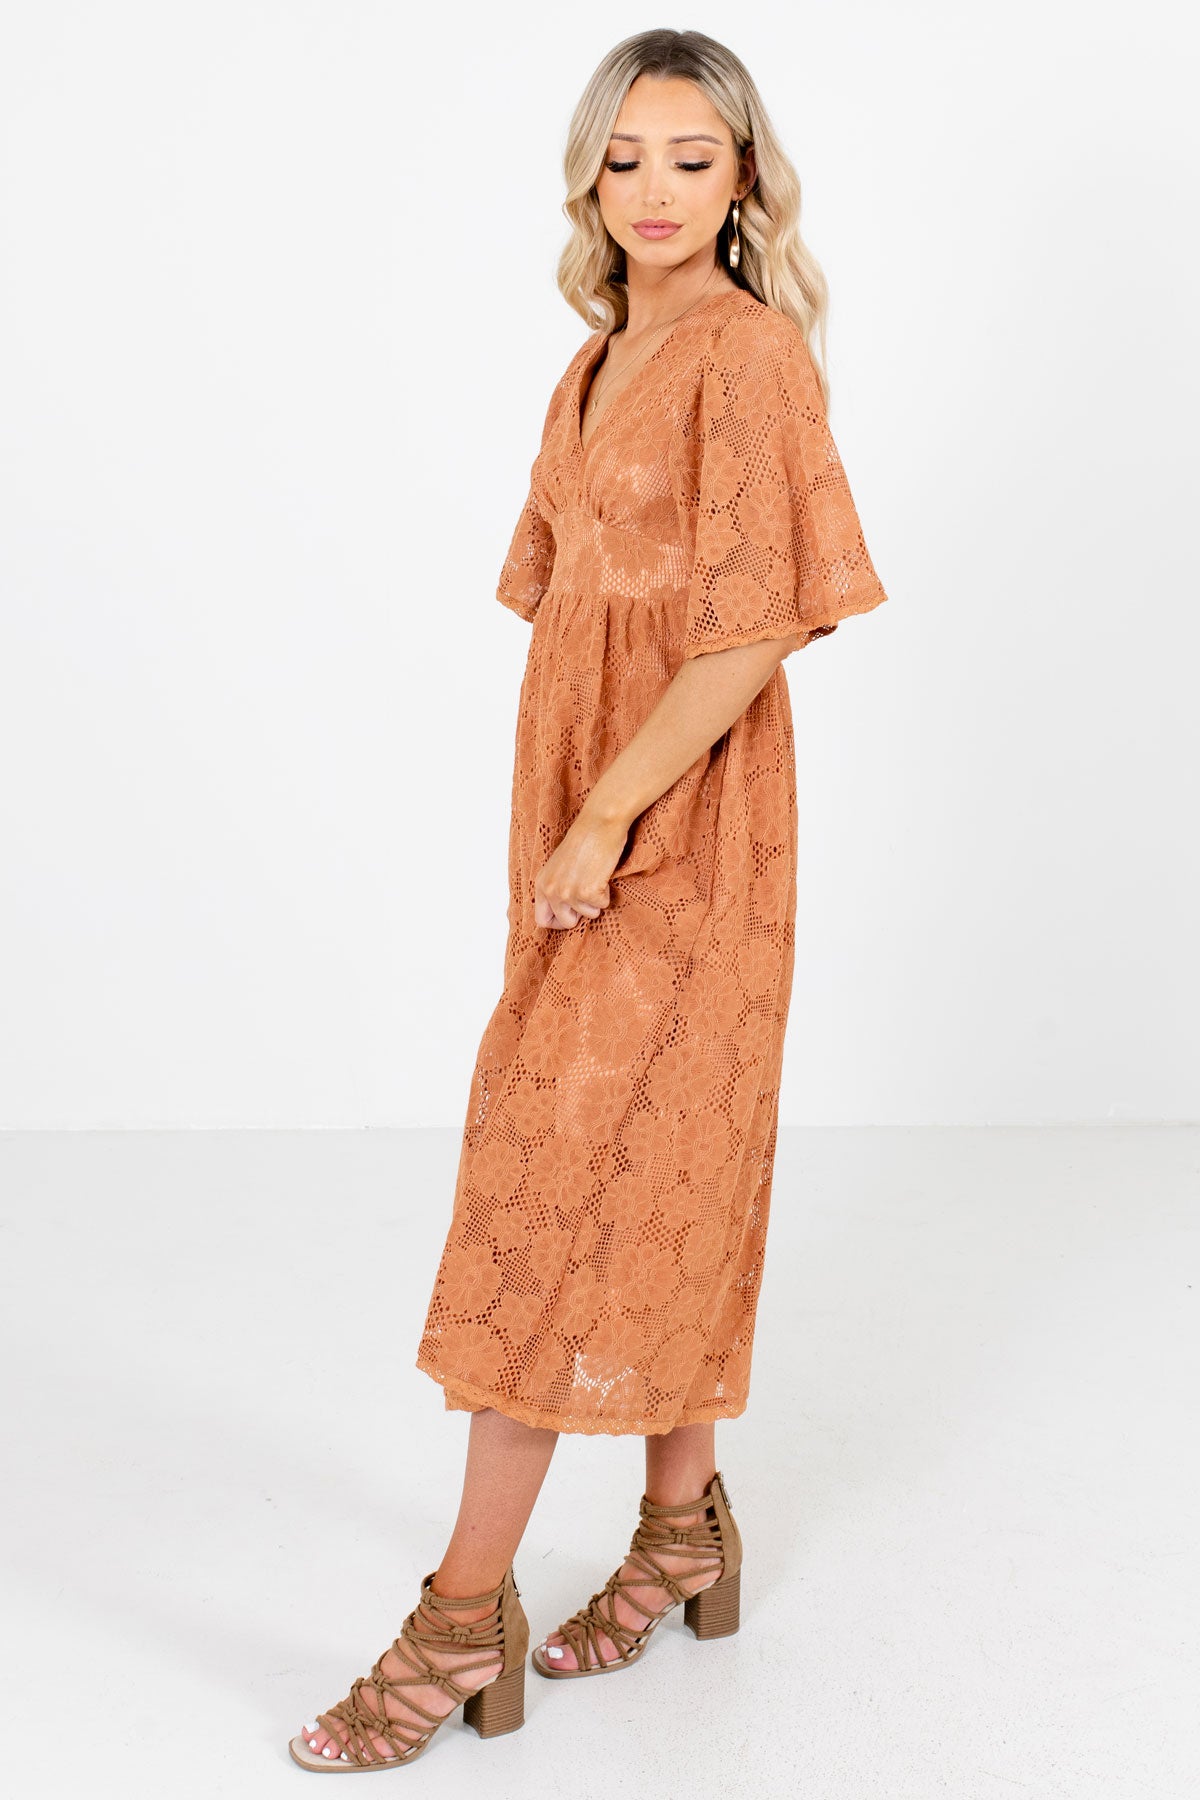 Floral and Lace Detailed Orange Midi Boutique Dress.